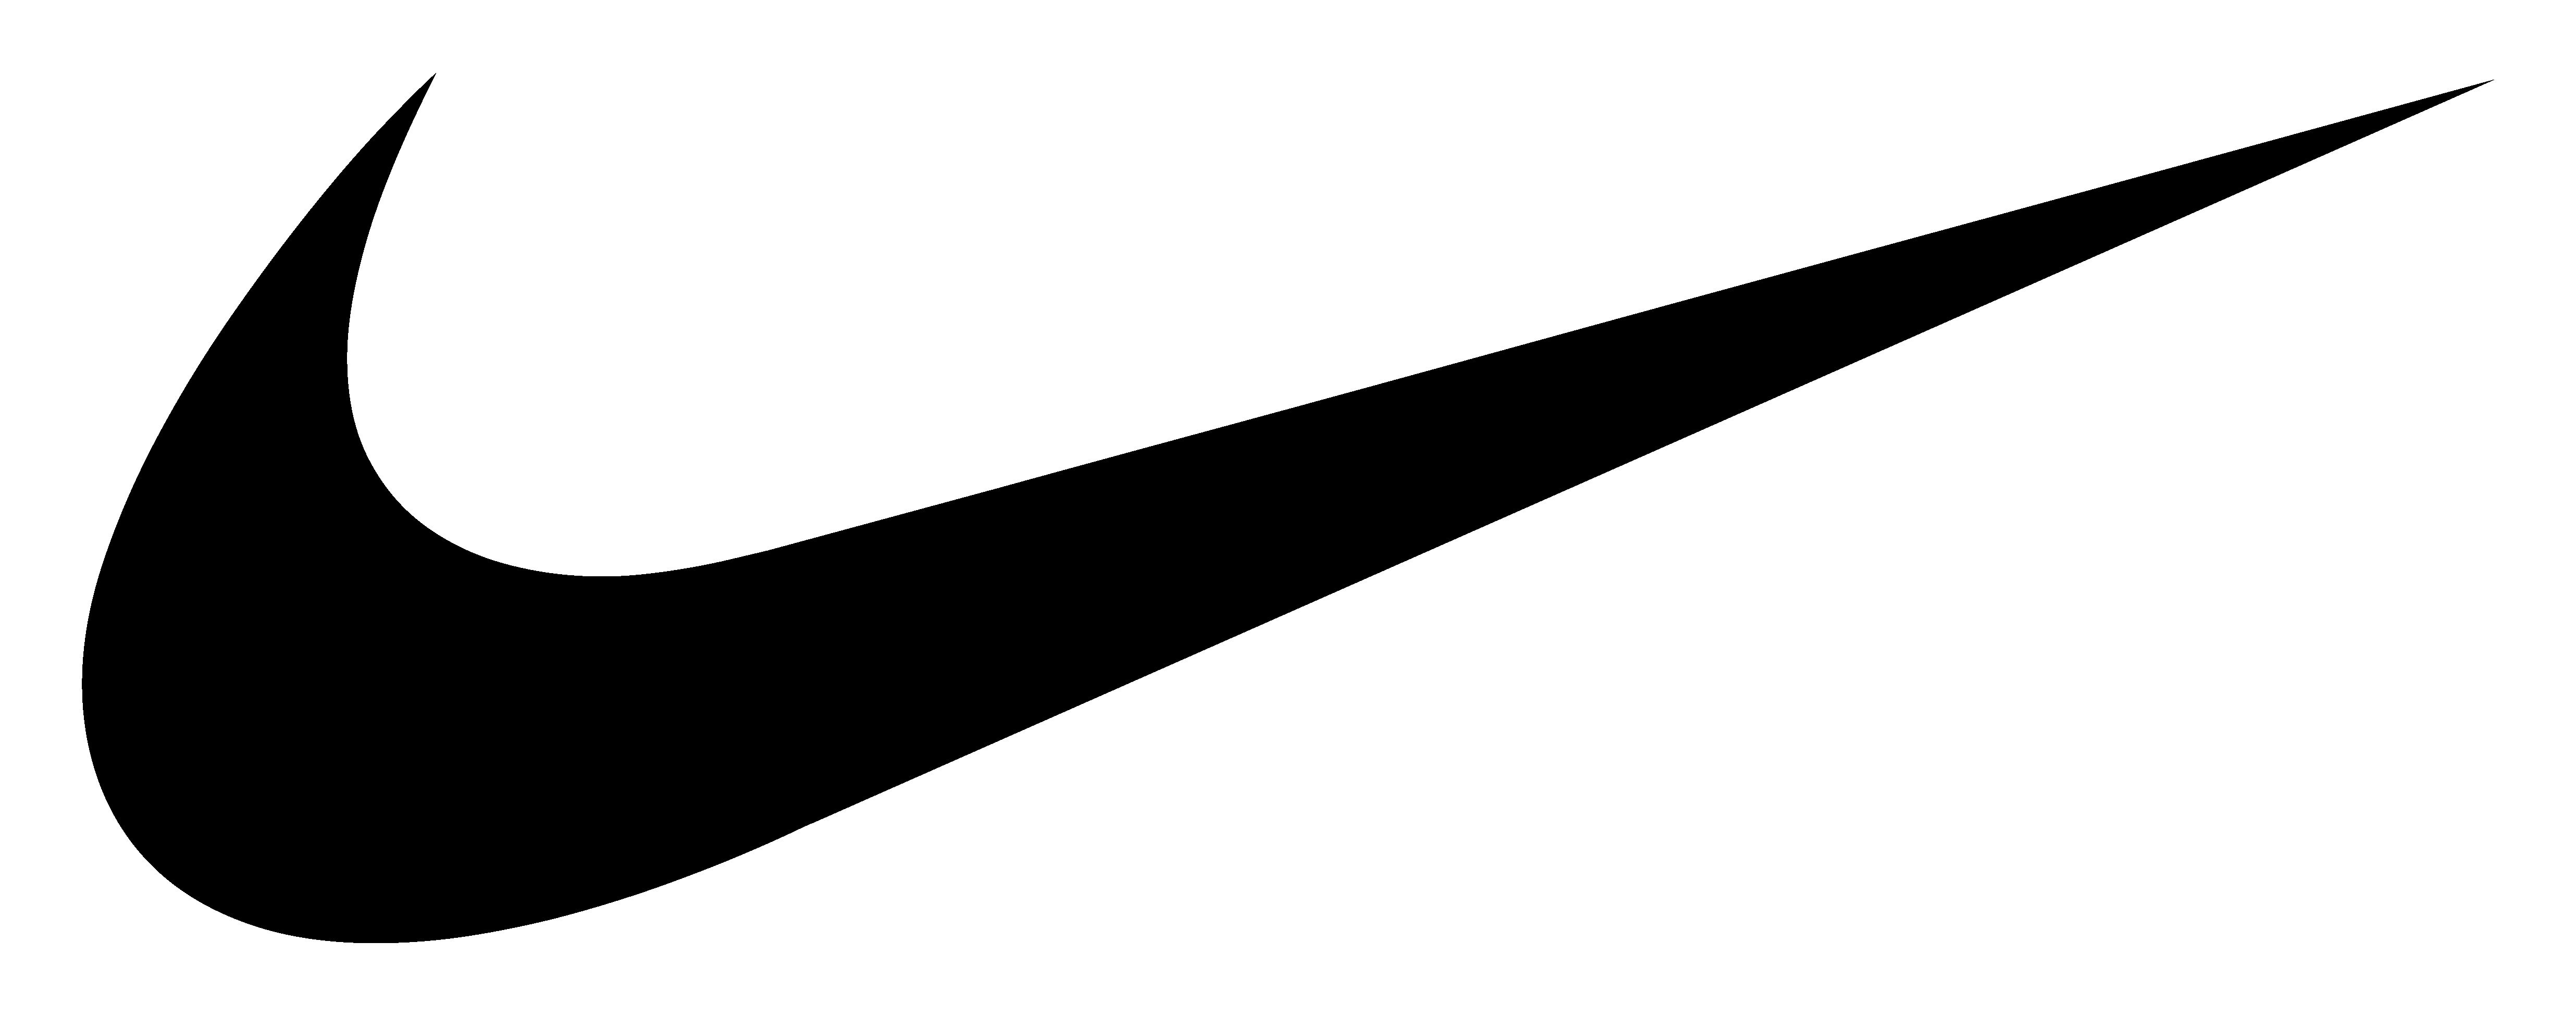 Nike Logo Shoes Brand PNG Transparent Background, Free Download ...